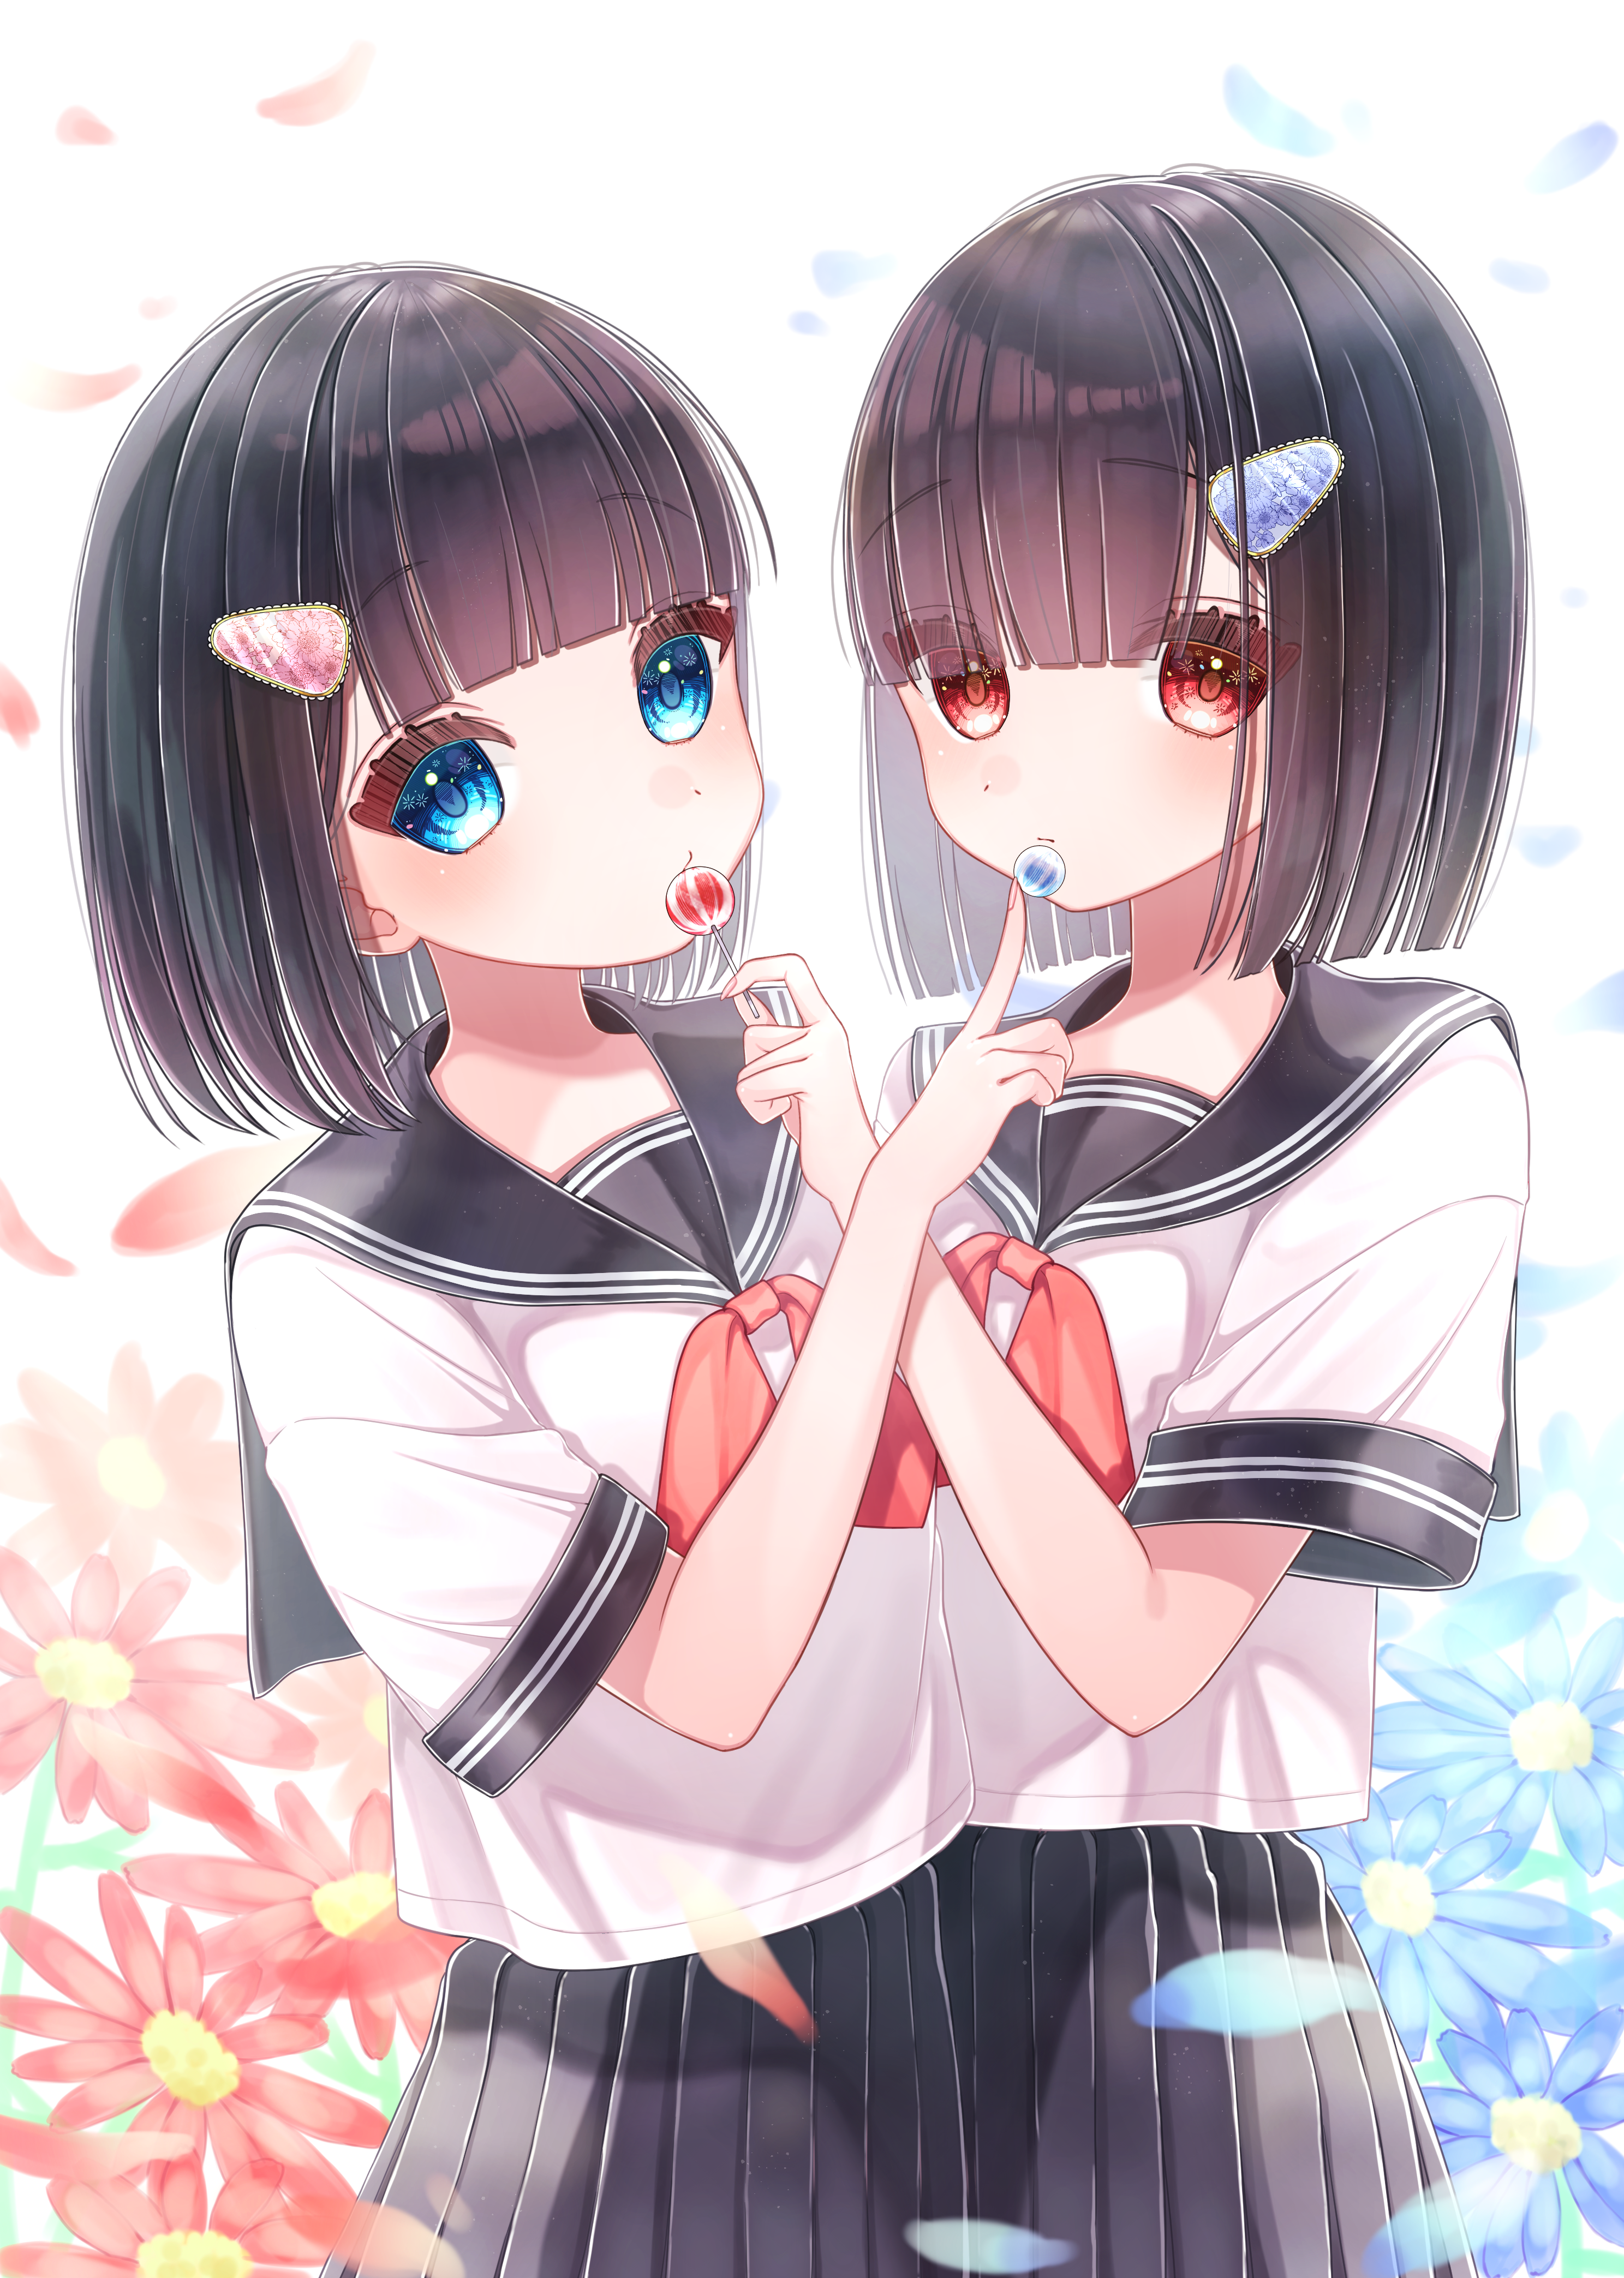 Anime 2976x4175 anime anime girls original characters twins artwork digital art fan art